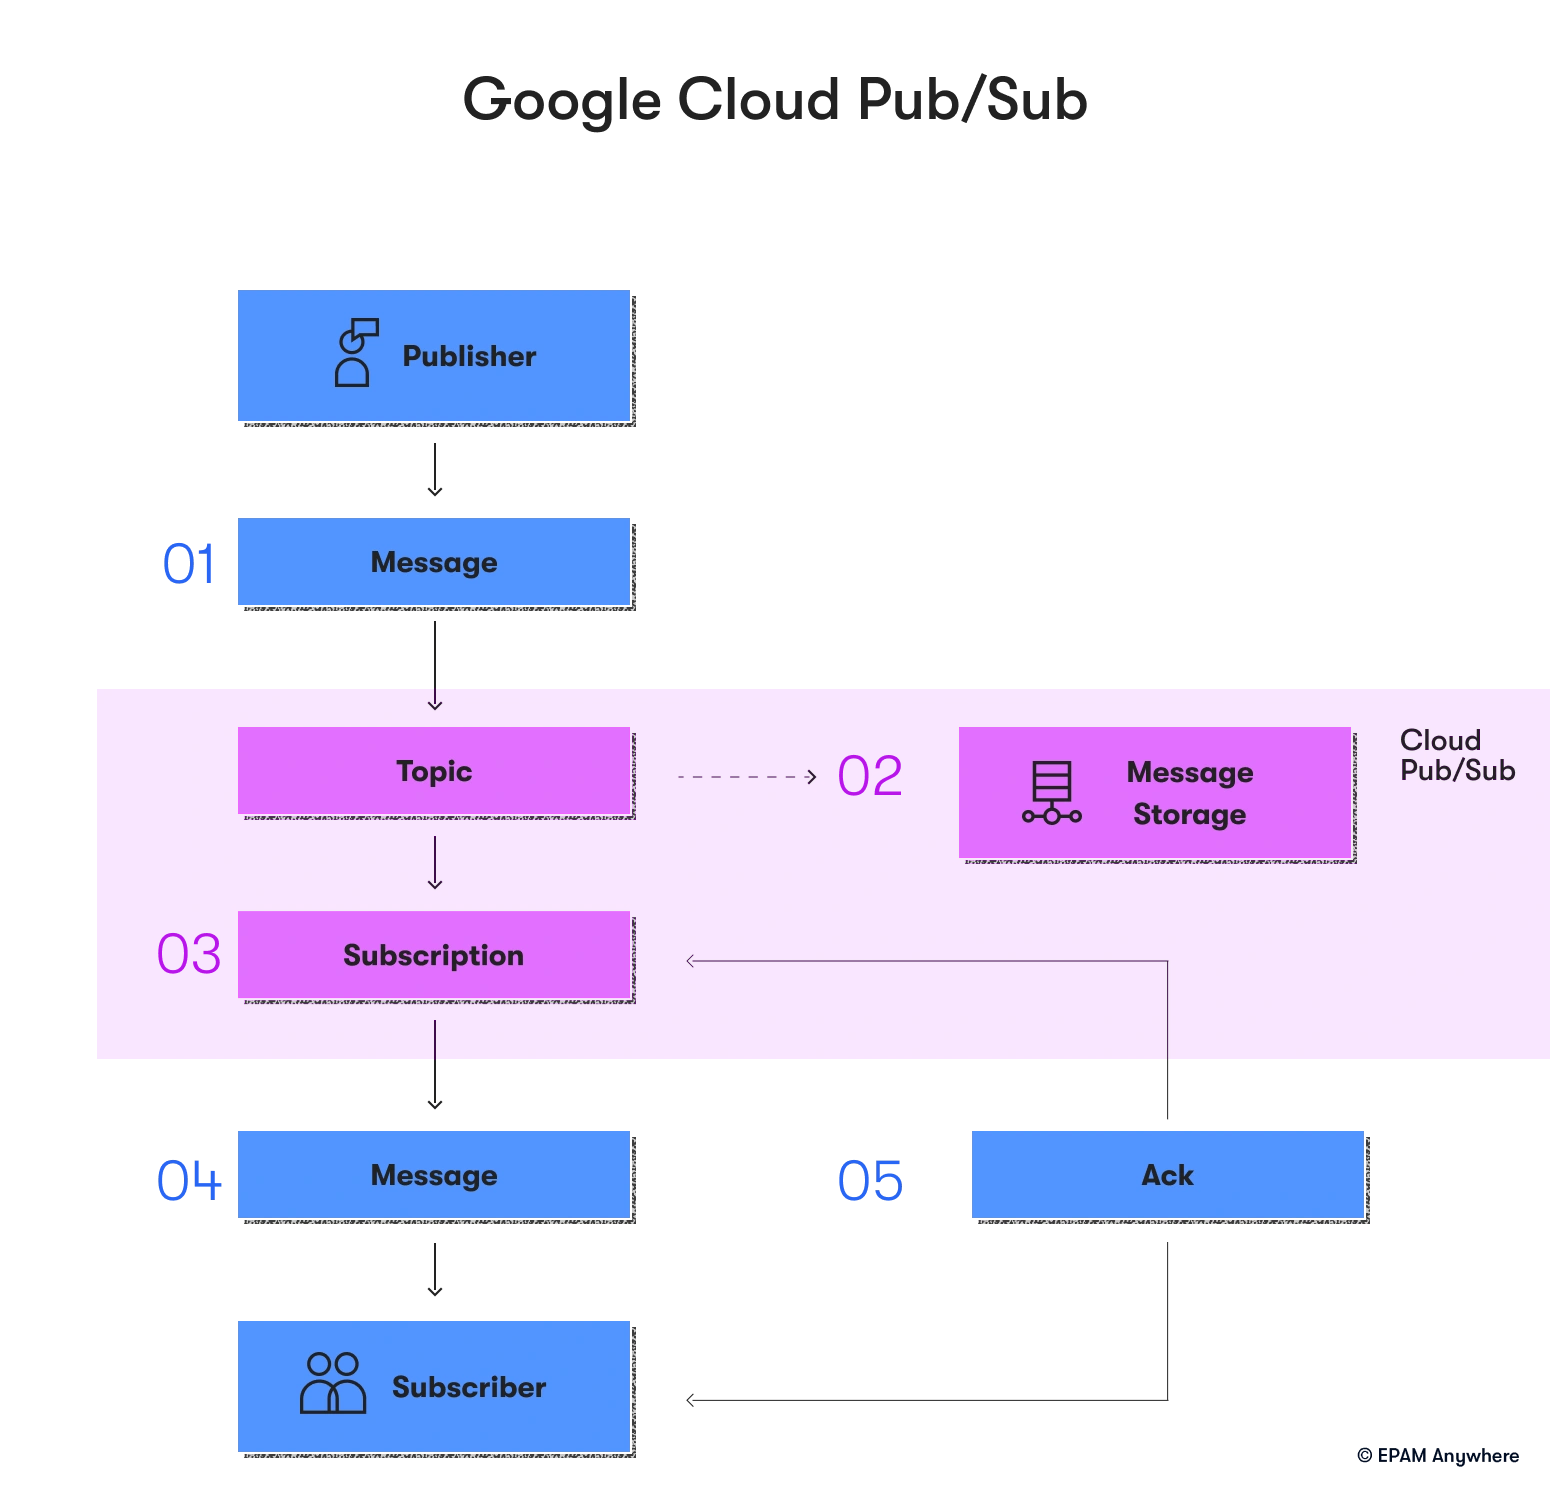 How does Google Cloud Pub/Sub work? A GCP interview question